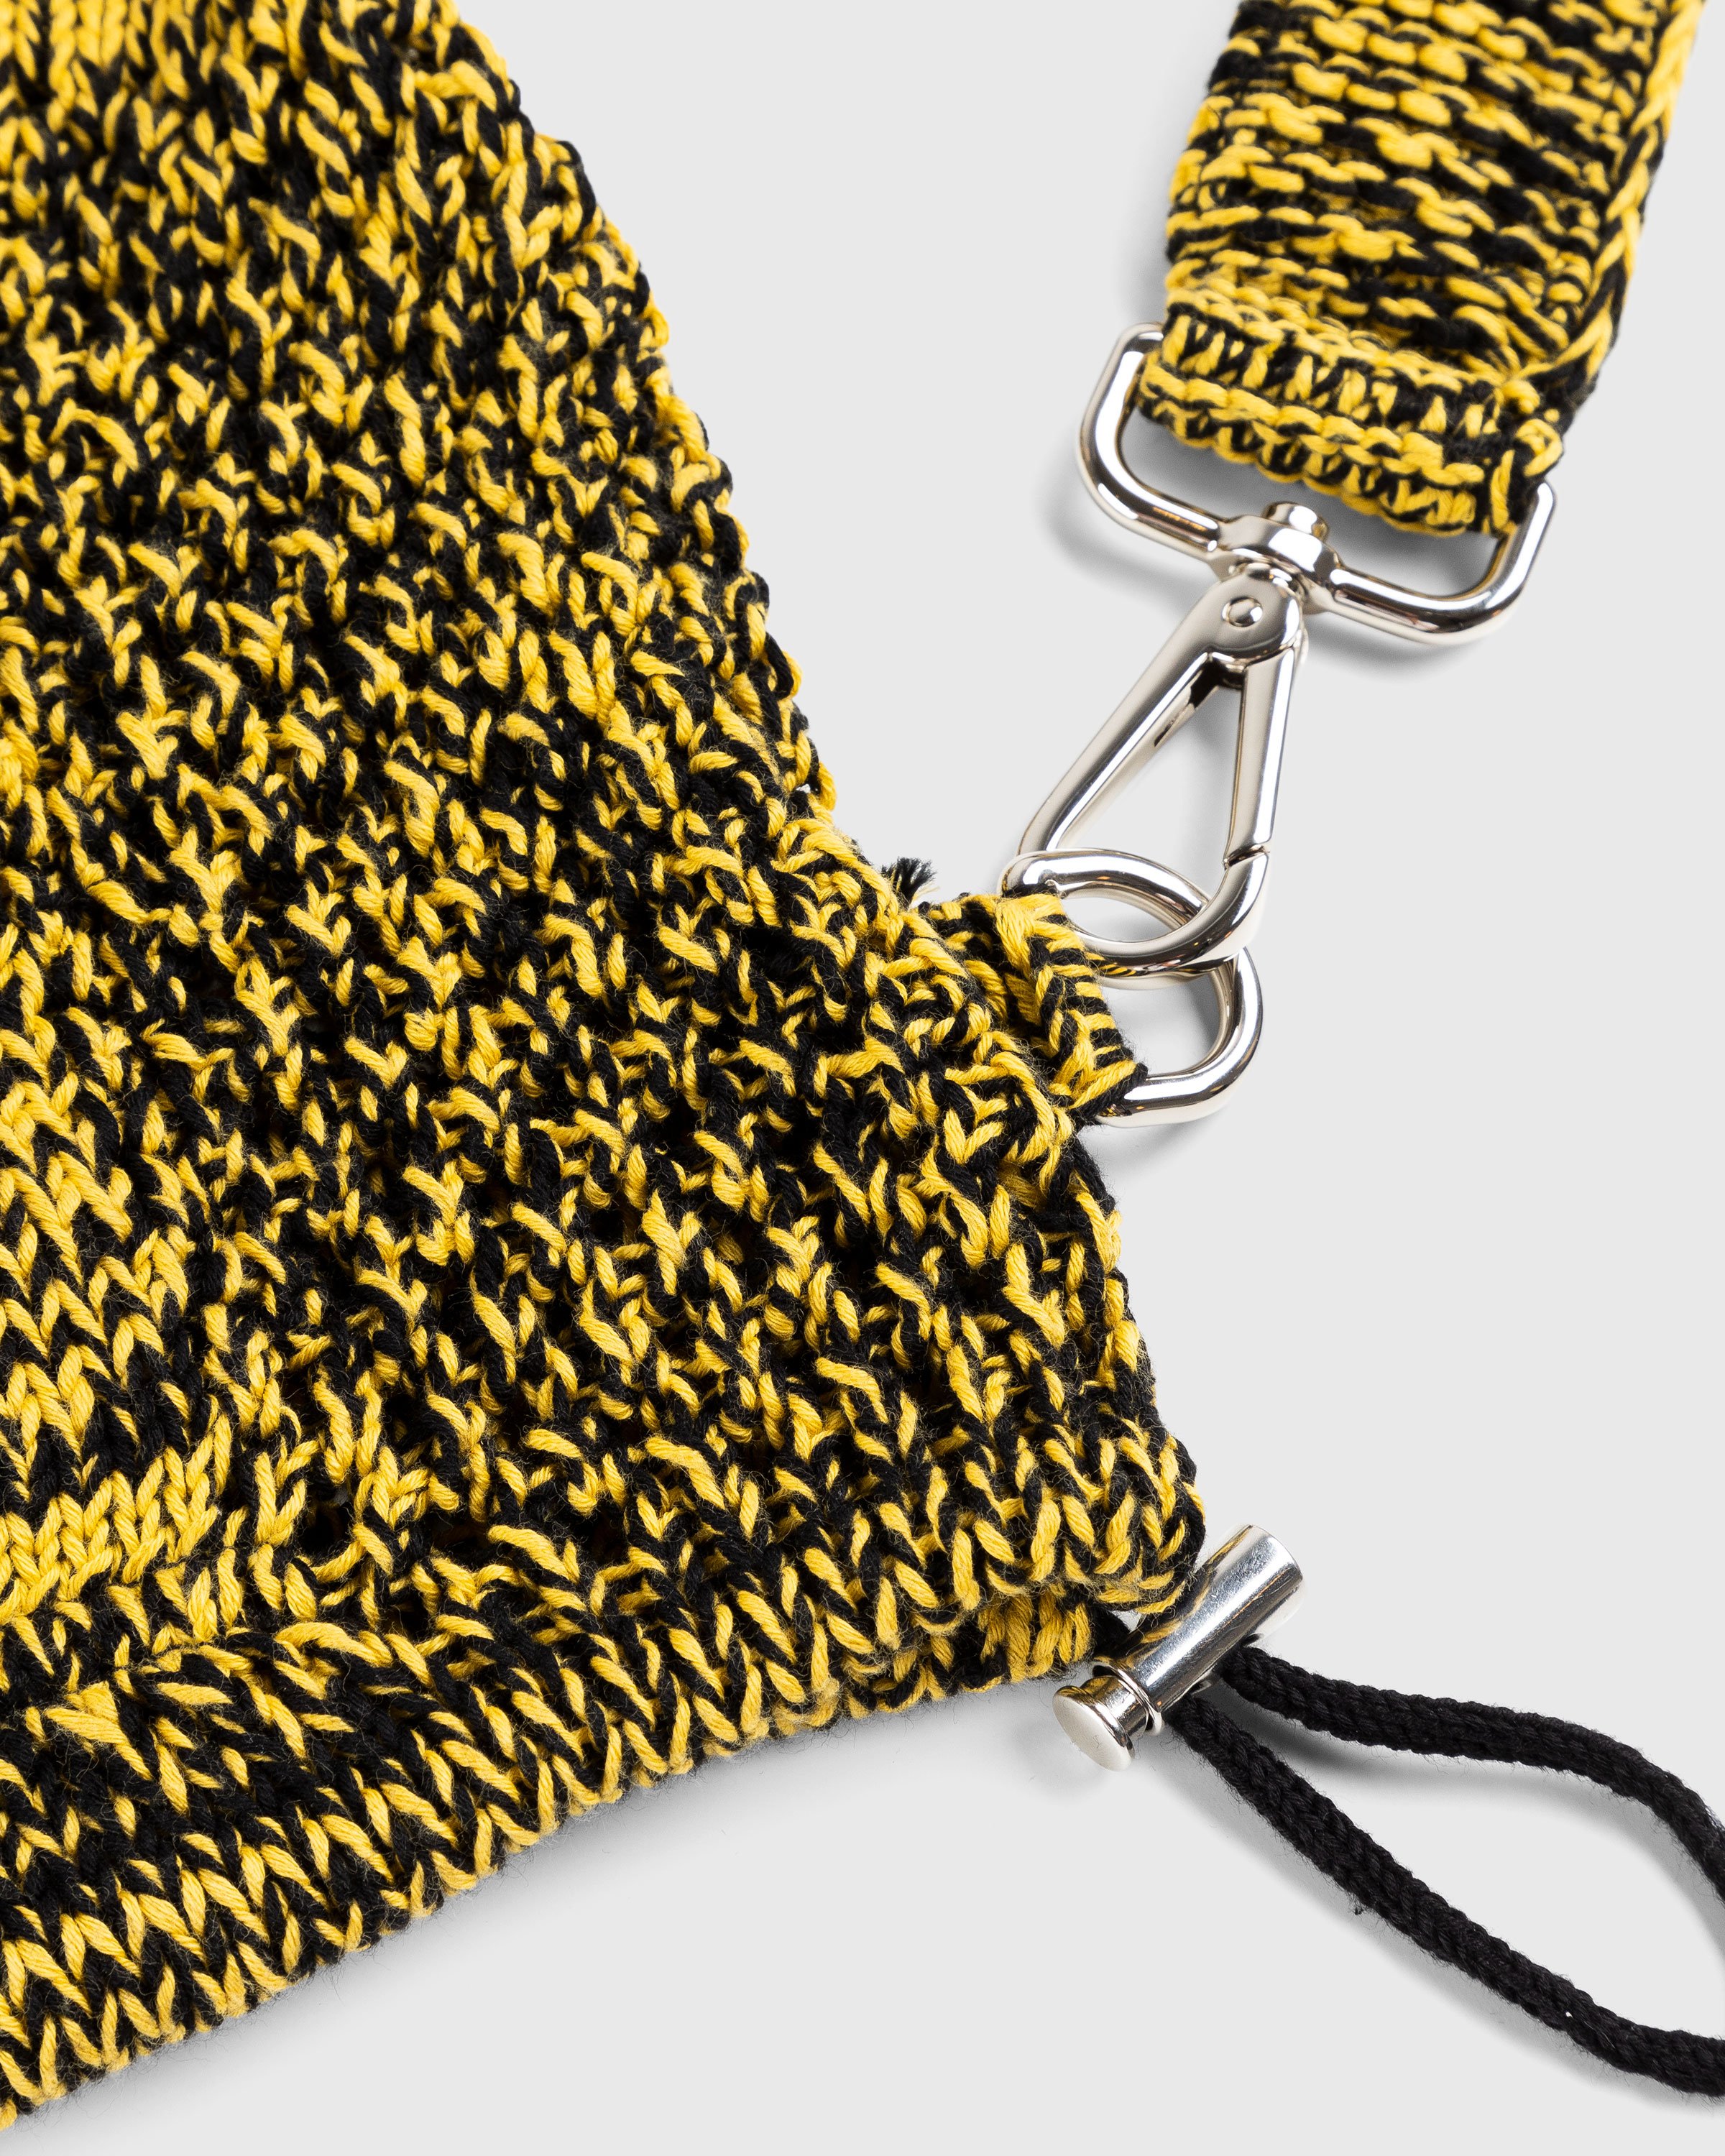 SSU - Mesh Stitch Knitted Bag Black/Yellow - Accessories - Black - Image 3